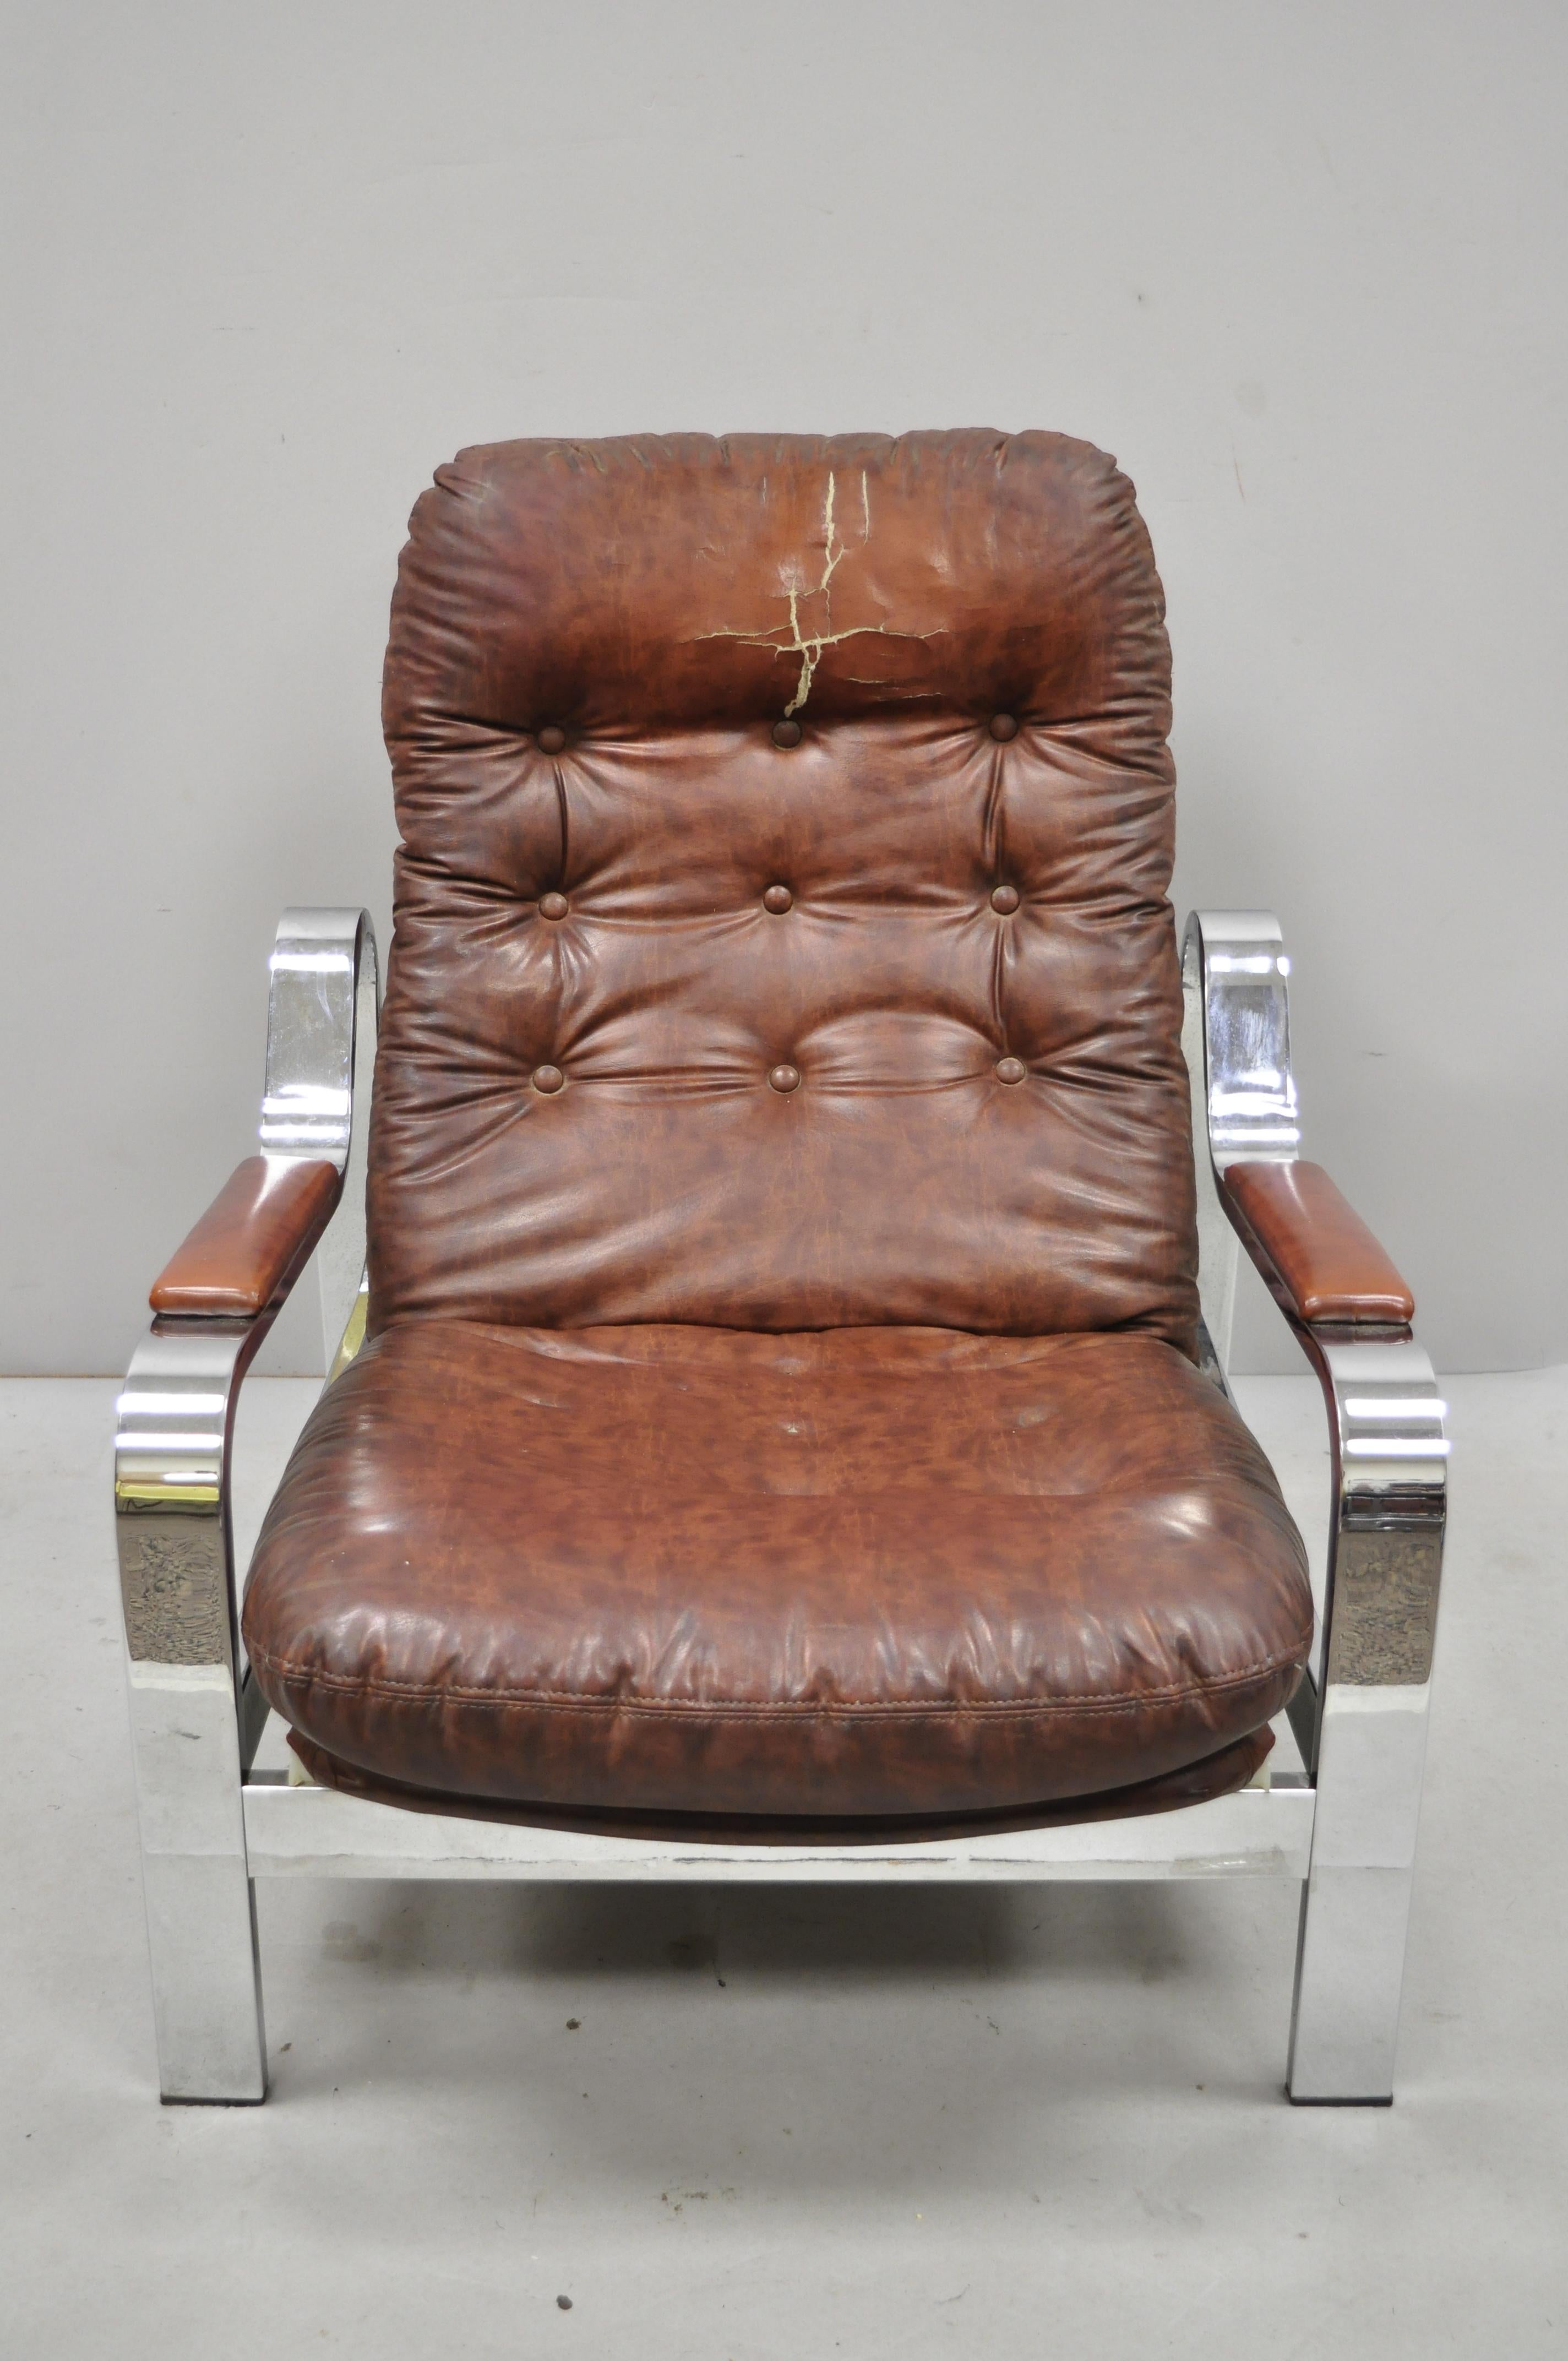 Midcentury Italian modern Selig chrome reclining recliner lounge chair, circa mid-20th century. Measurements: 34